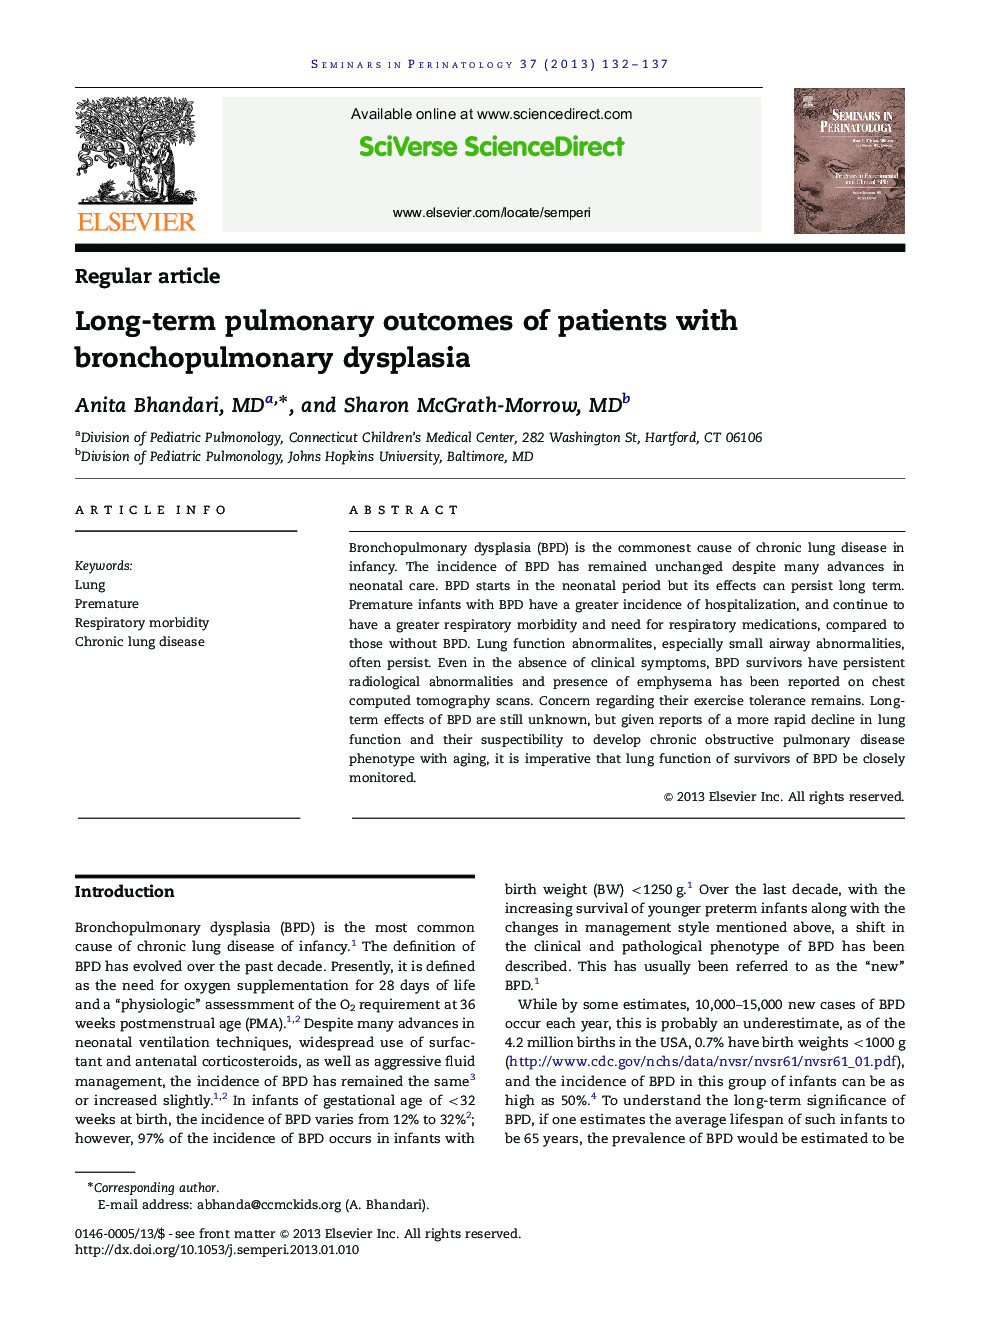 Long-term pulmonary outcomes of patients with bronchopulmonary dysplasia